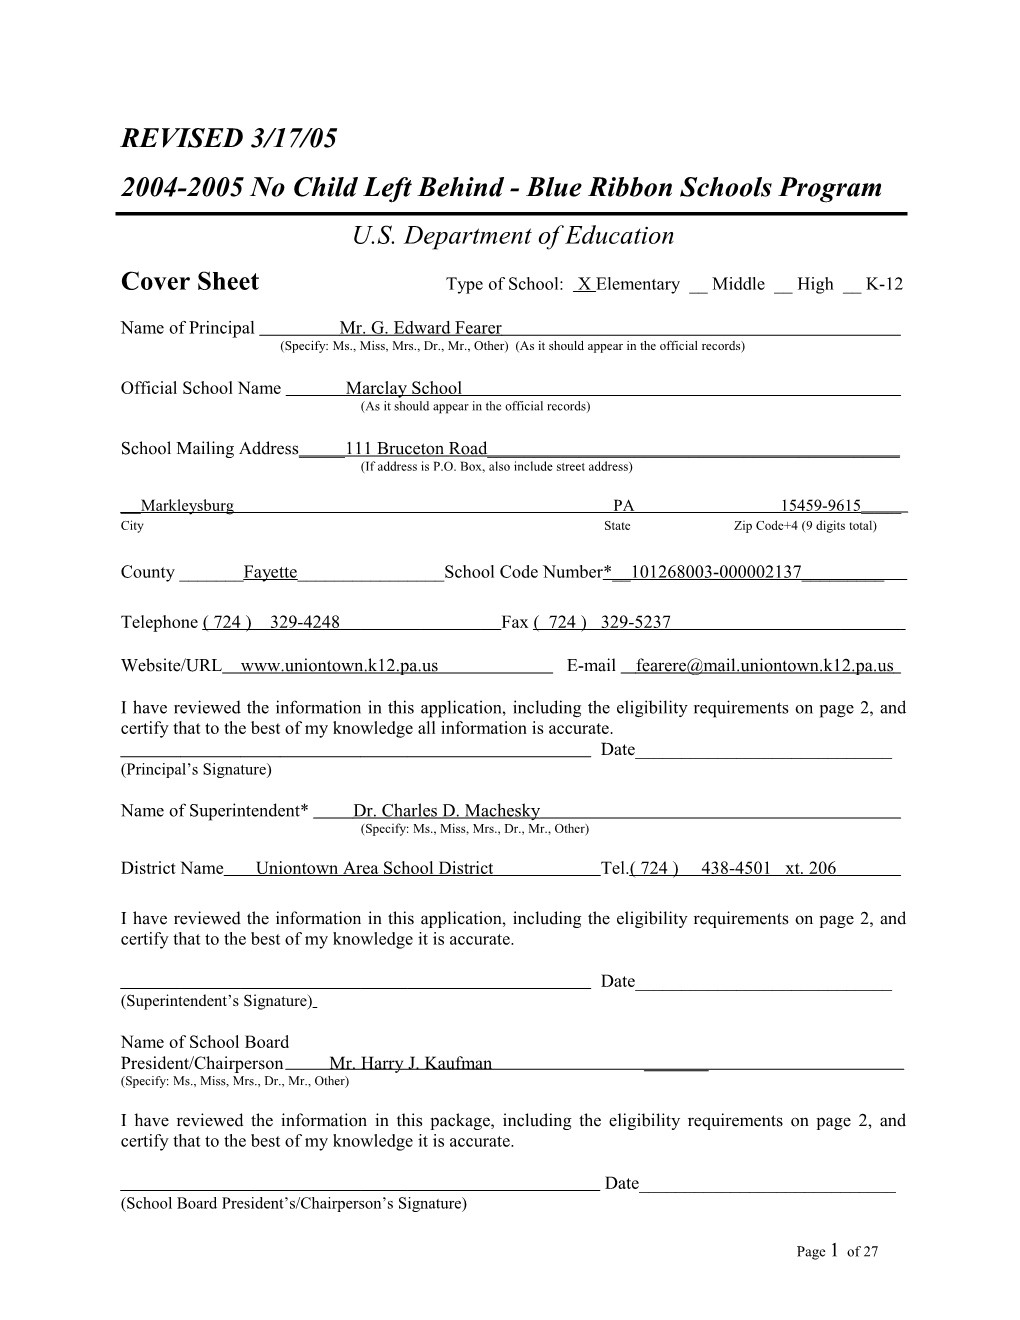 Marclay School Application: 2004-2005, No Child Left Behind - Blue Ribbon Schools Program